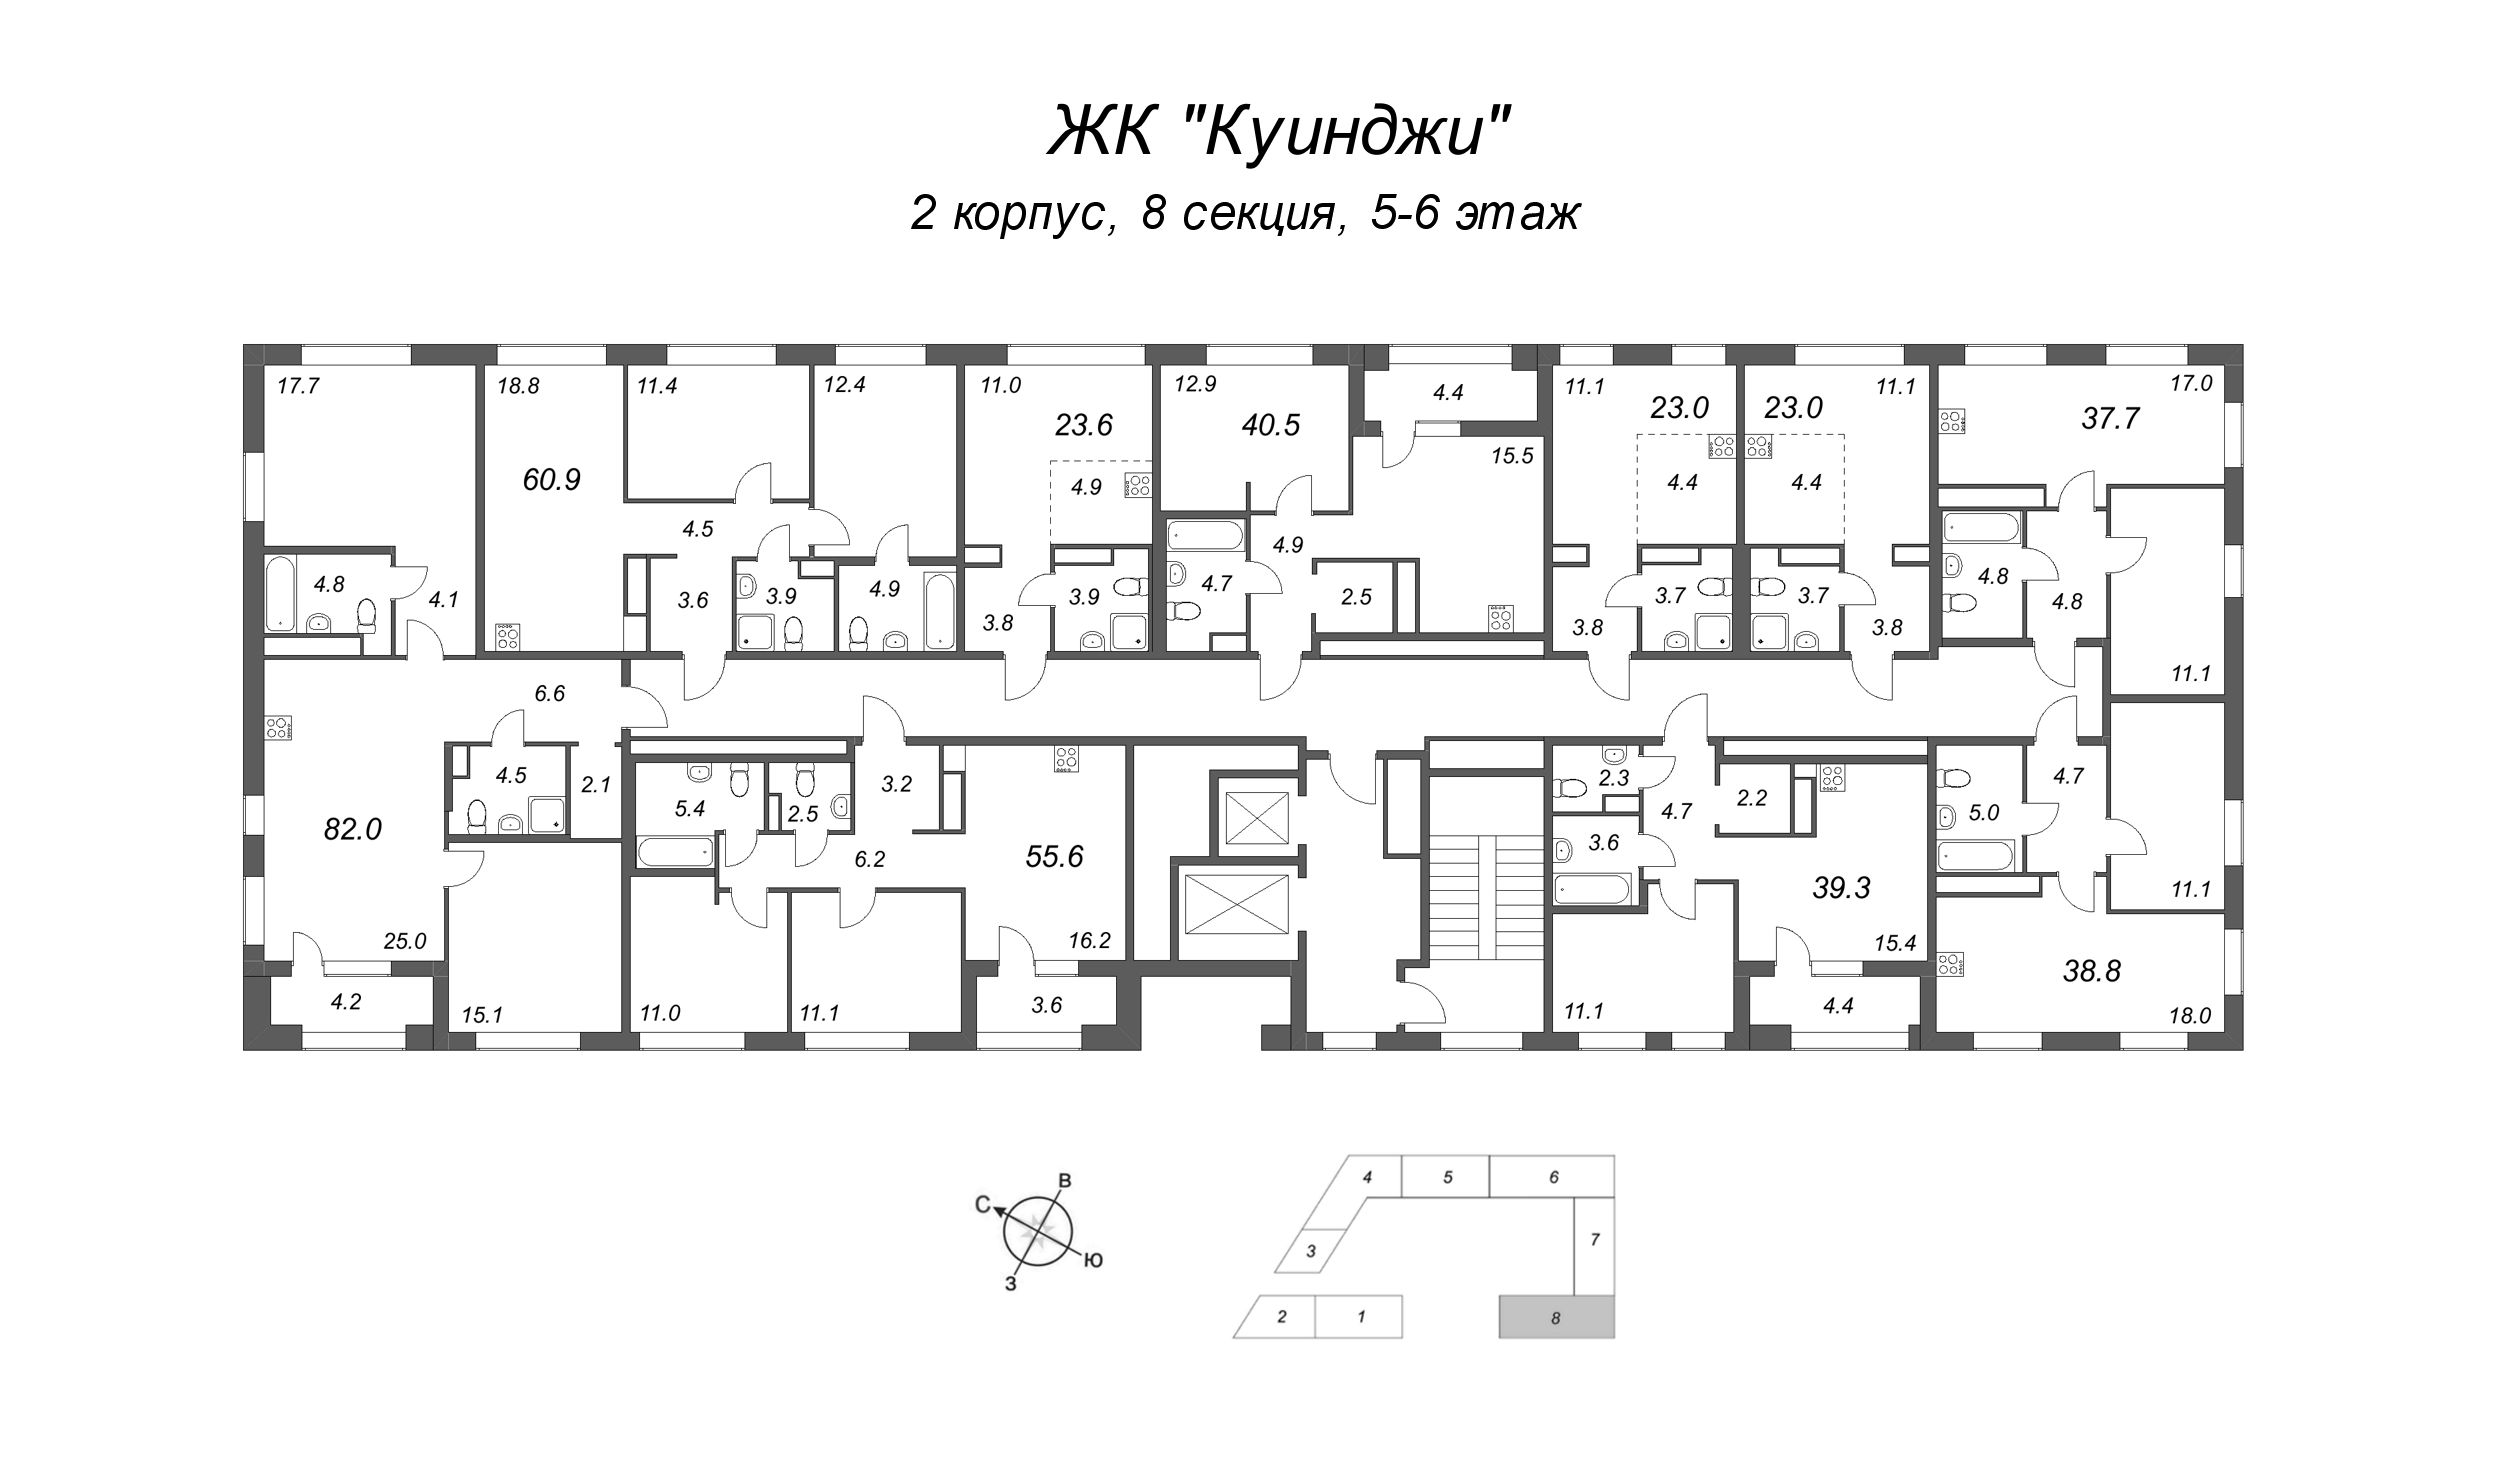 3-комнатная (Евро) квартира, 60.9 м² в ЖК "Куинджи" - планировка этажа